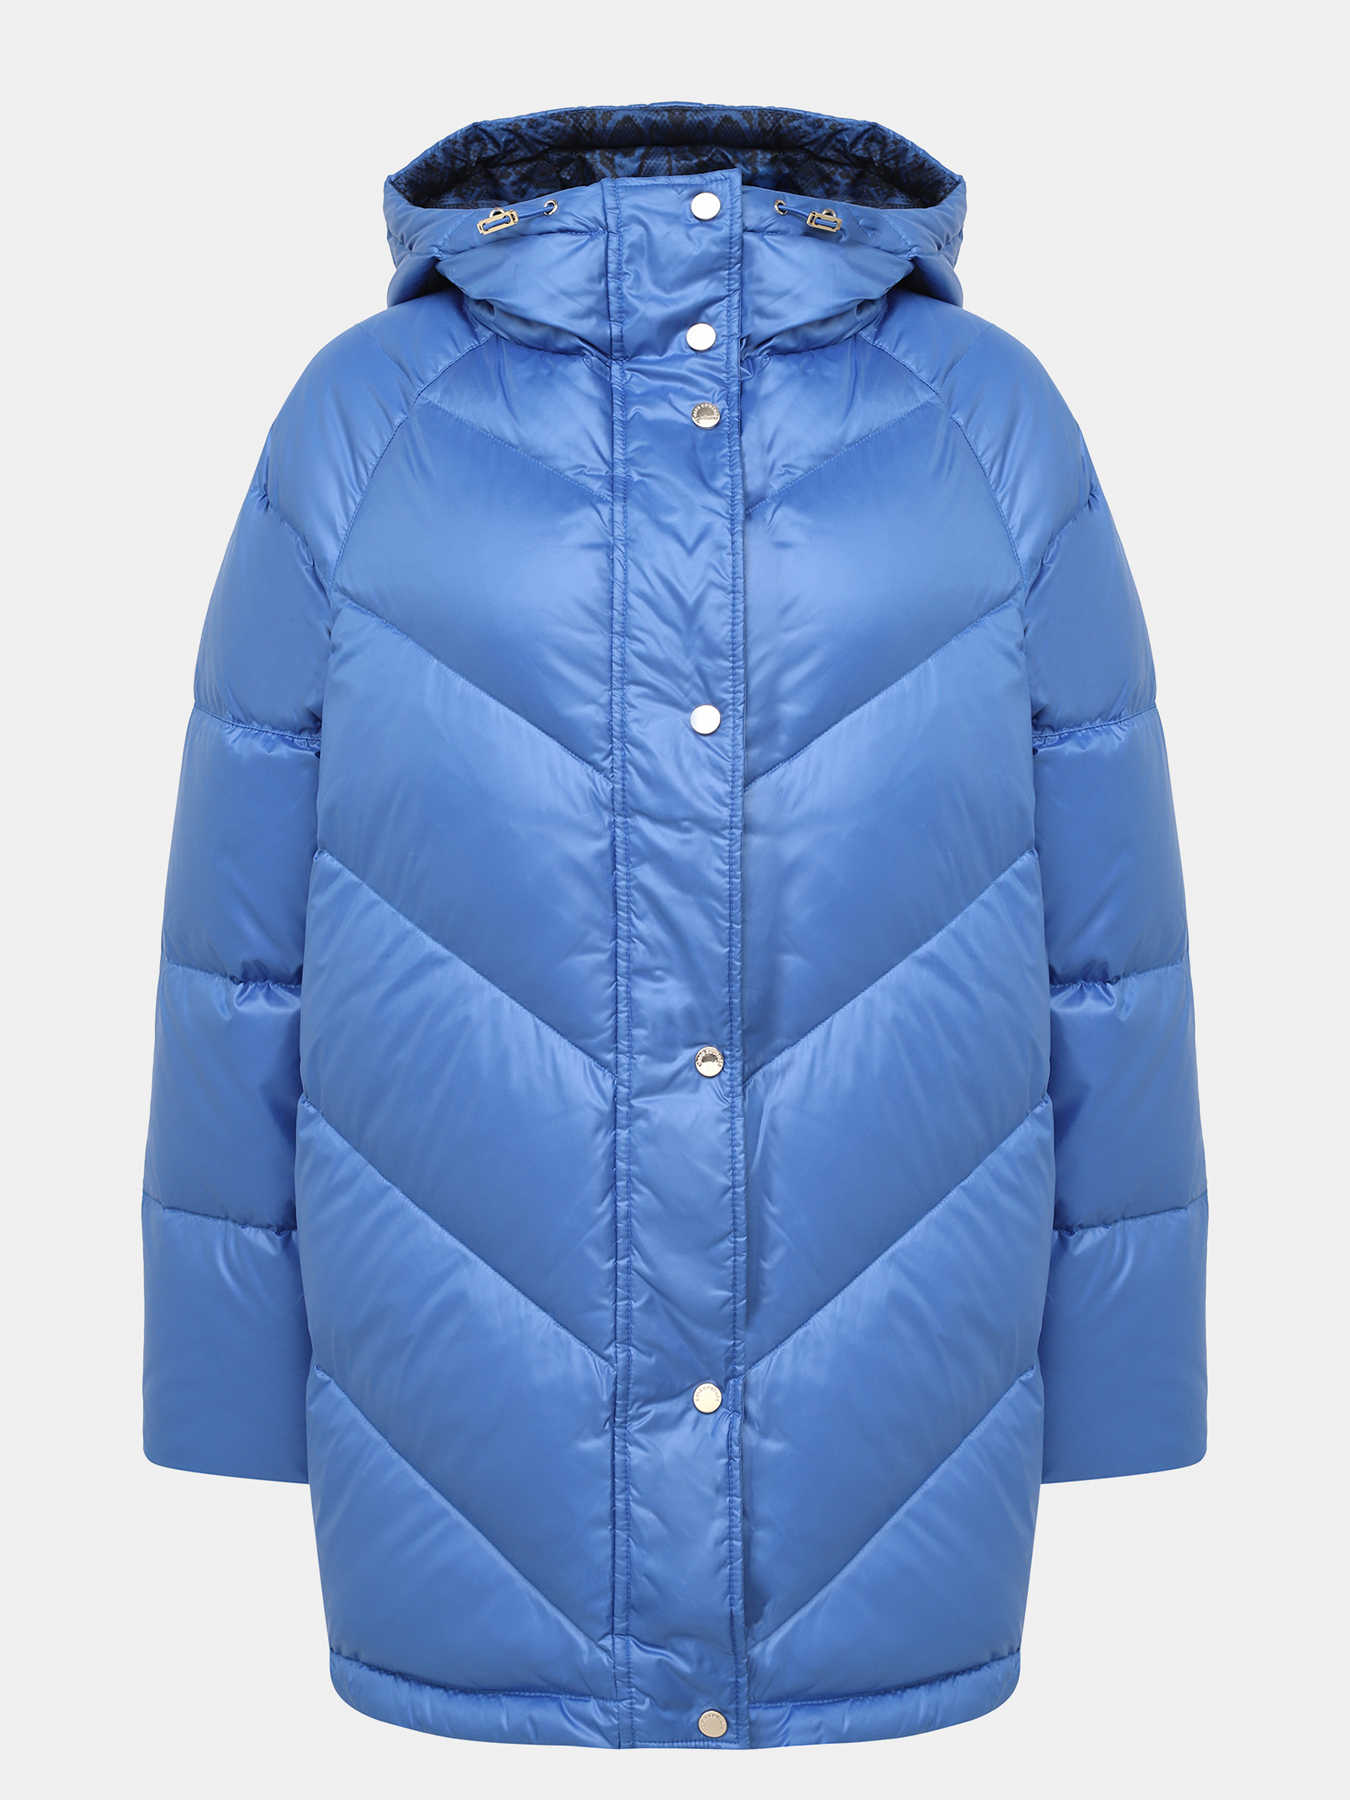 Куртка ORSA Couture 367408-021, цвет синий, размер 42 - фото 1